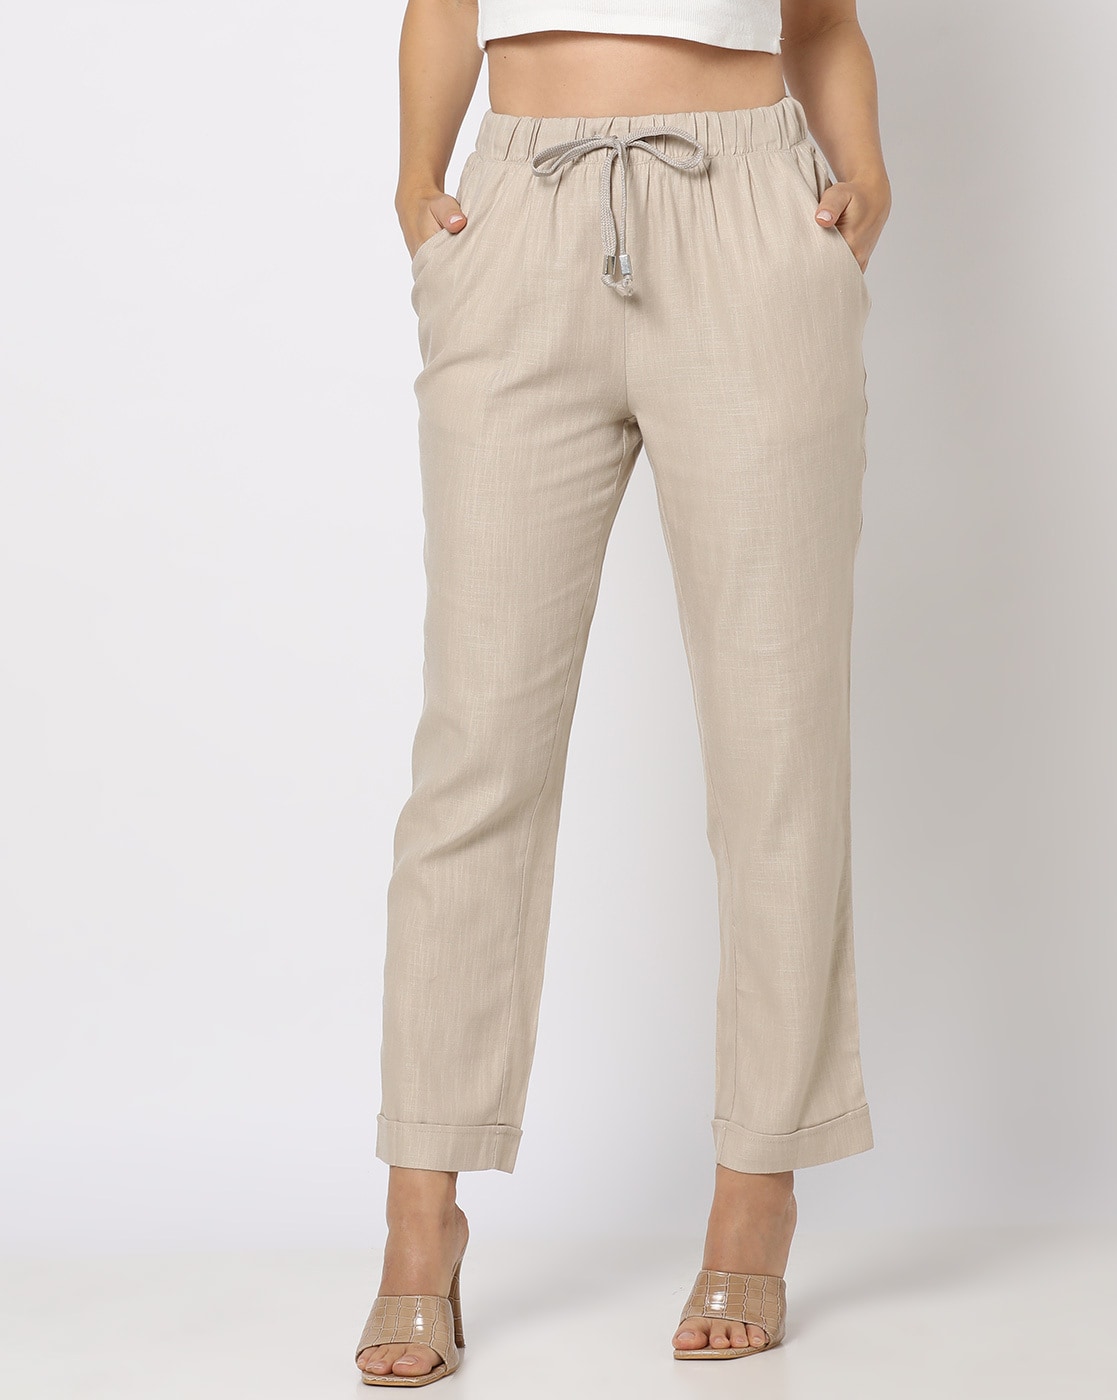 Buy Women Brown Solid Casual Regular Fit Trousers Online  859798  Van  Heusen